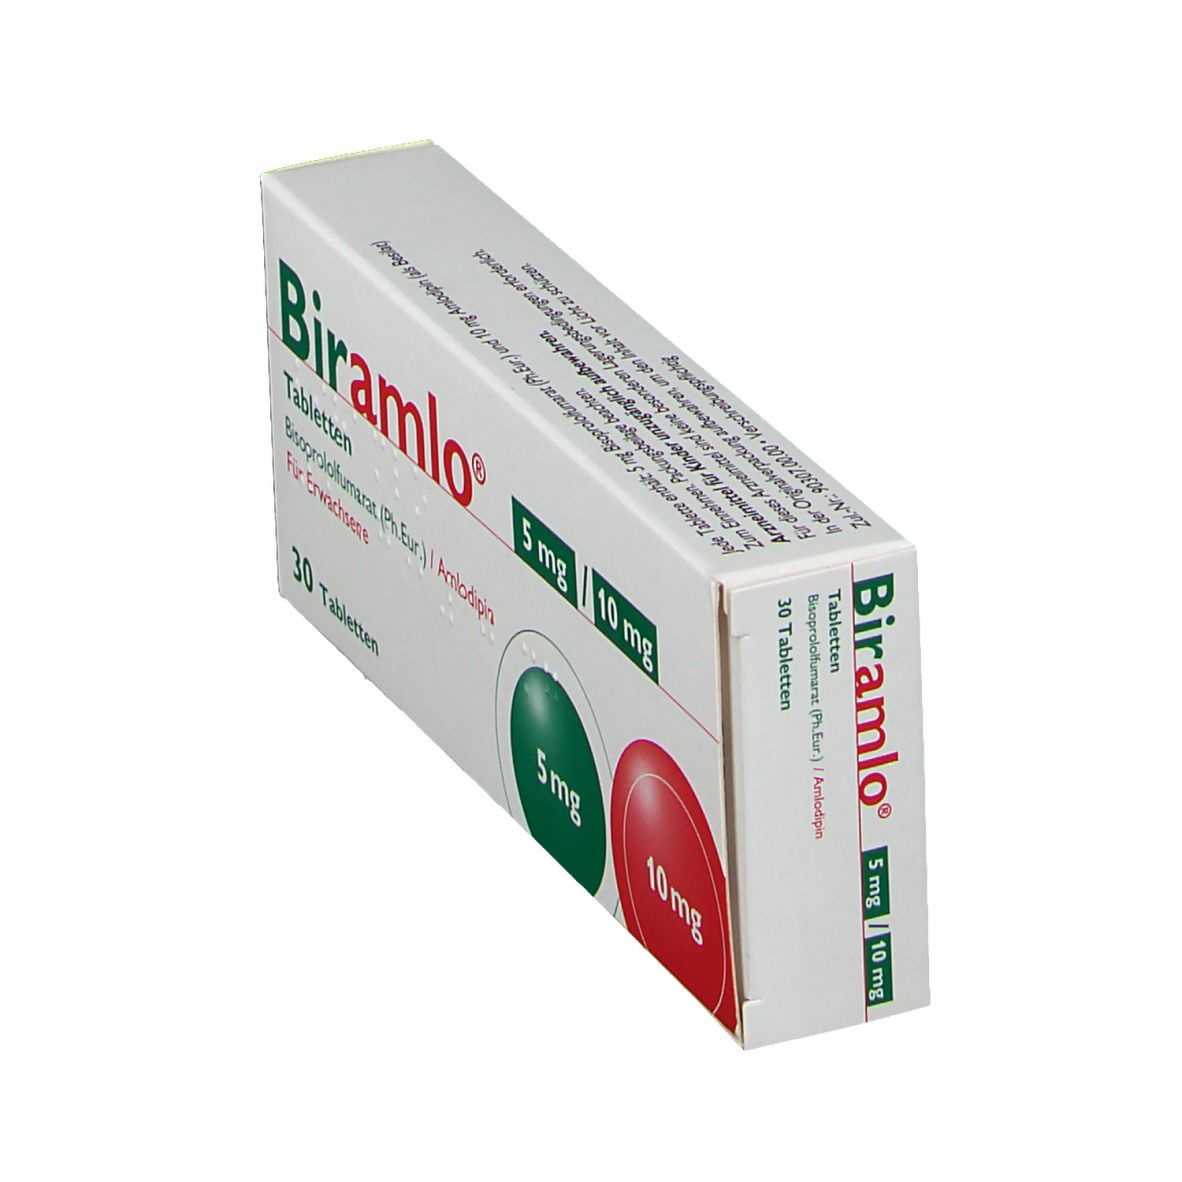 Biramlo® 5 mg/10 mg